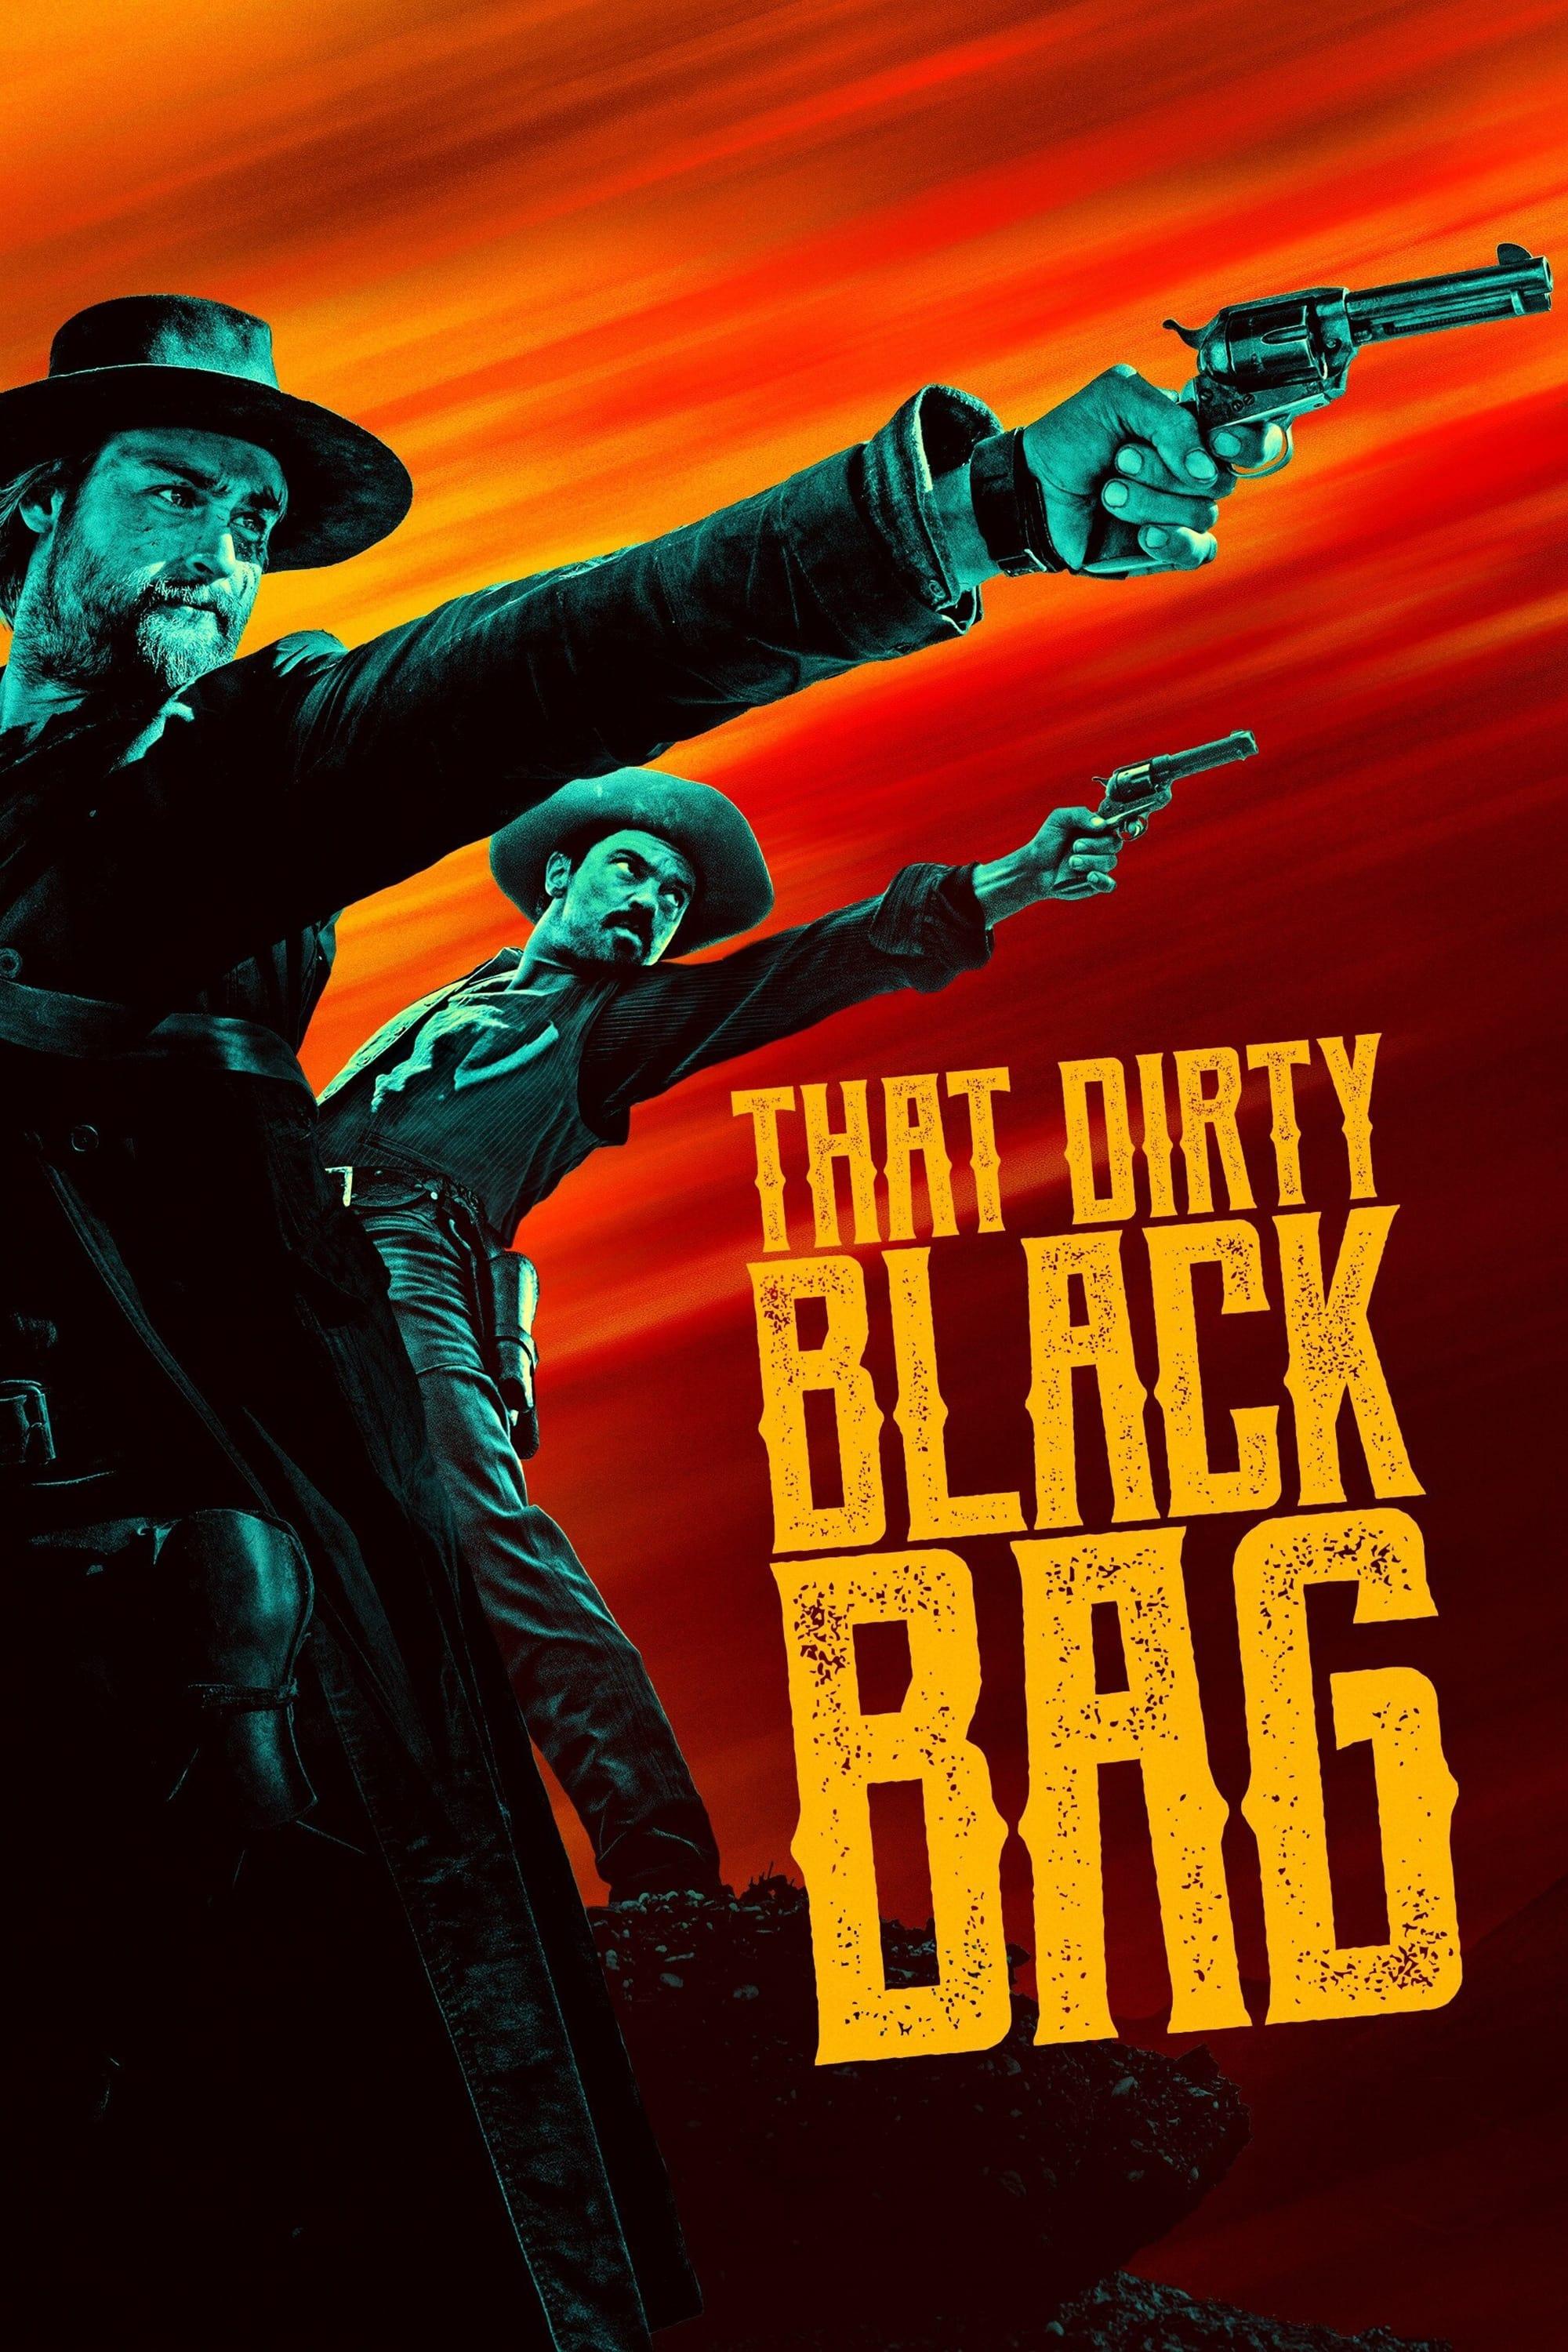 That Dirty Black Bag poster